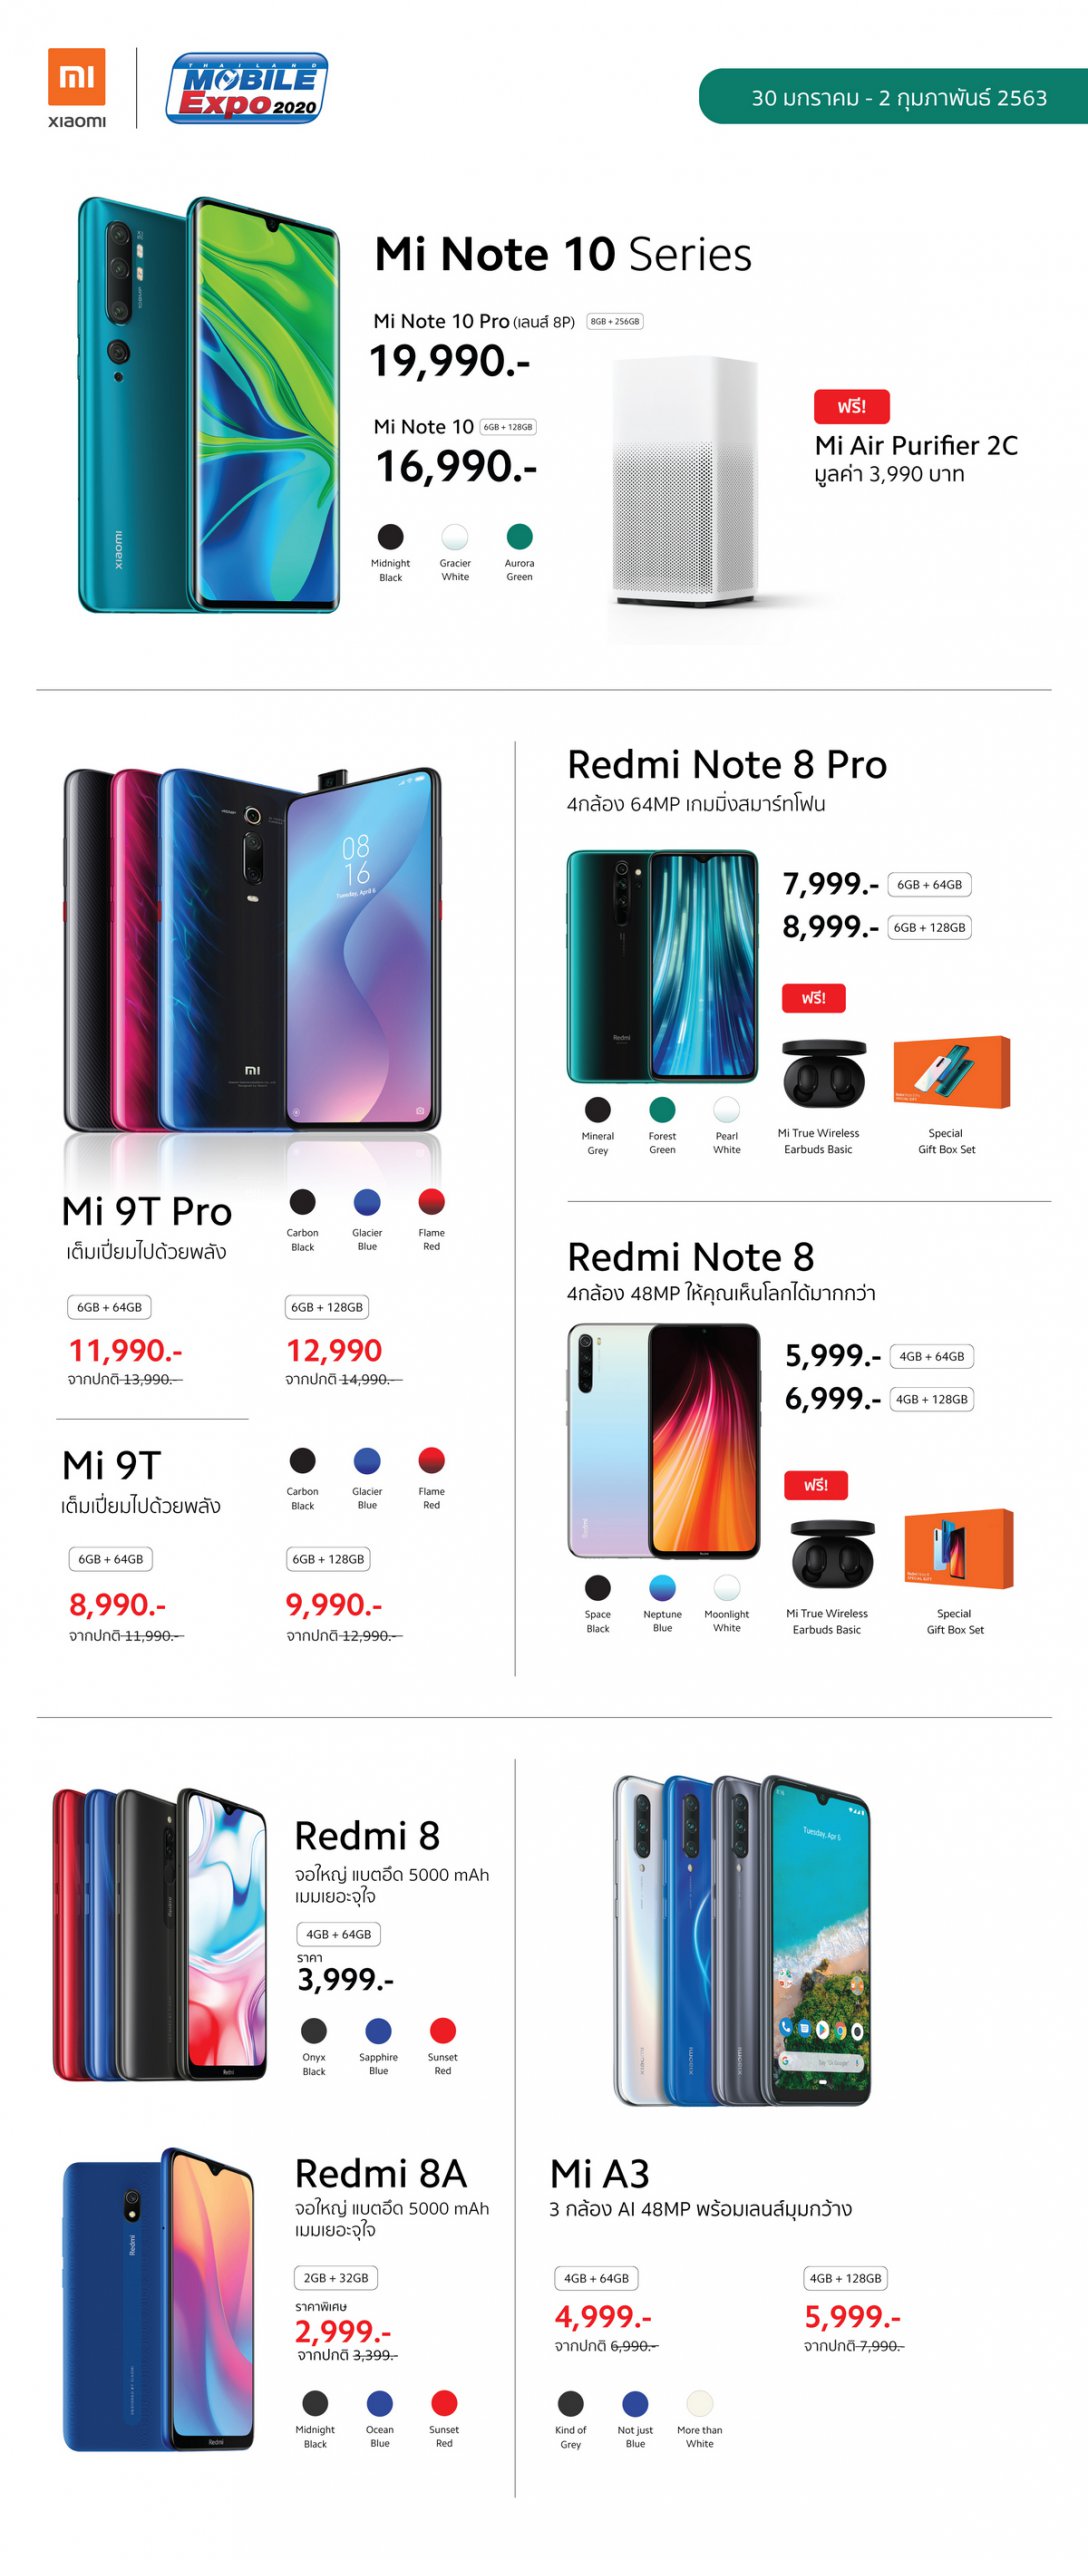 tme2020 promo resize 1 scaled | Mi Note 10 Pro | ชมภาพตัวอย่างชุดใหญ่ Xiaomi Mi Note 10 Pro สมาร์ทโฟนรุ่นแรกของโลกที่ถ่ายได้ด้วยความละเอียด 108 ล้านพิกเซล พร้อมเผยโปรโมชั่นภายในงาน TME 2020